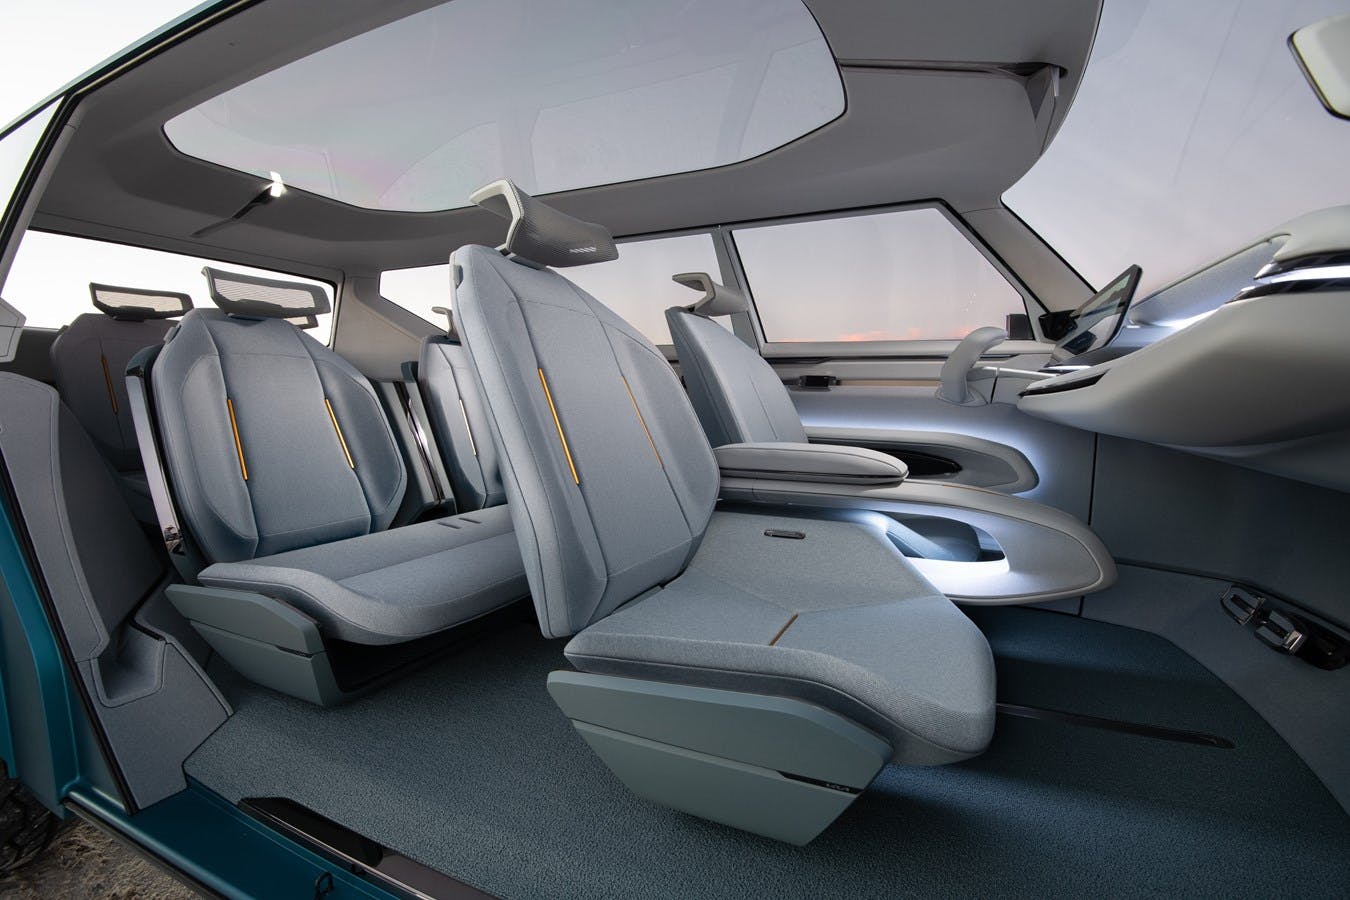 Kia Concept EV9 electric SUV interior